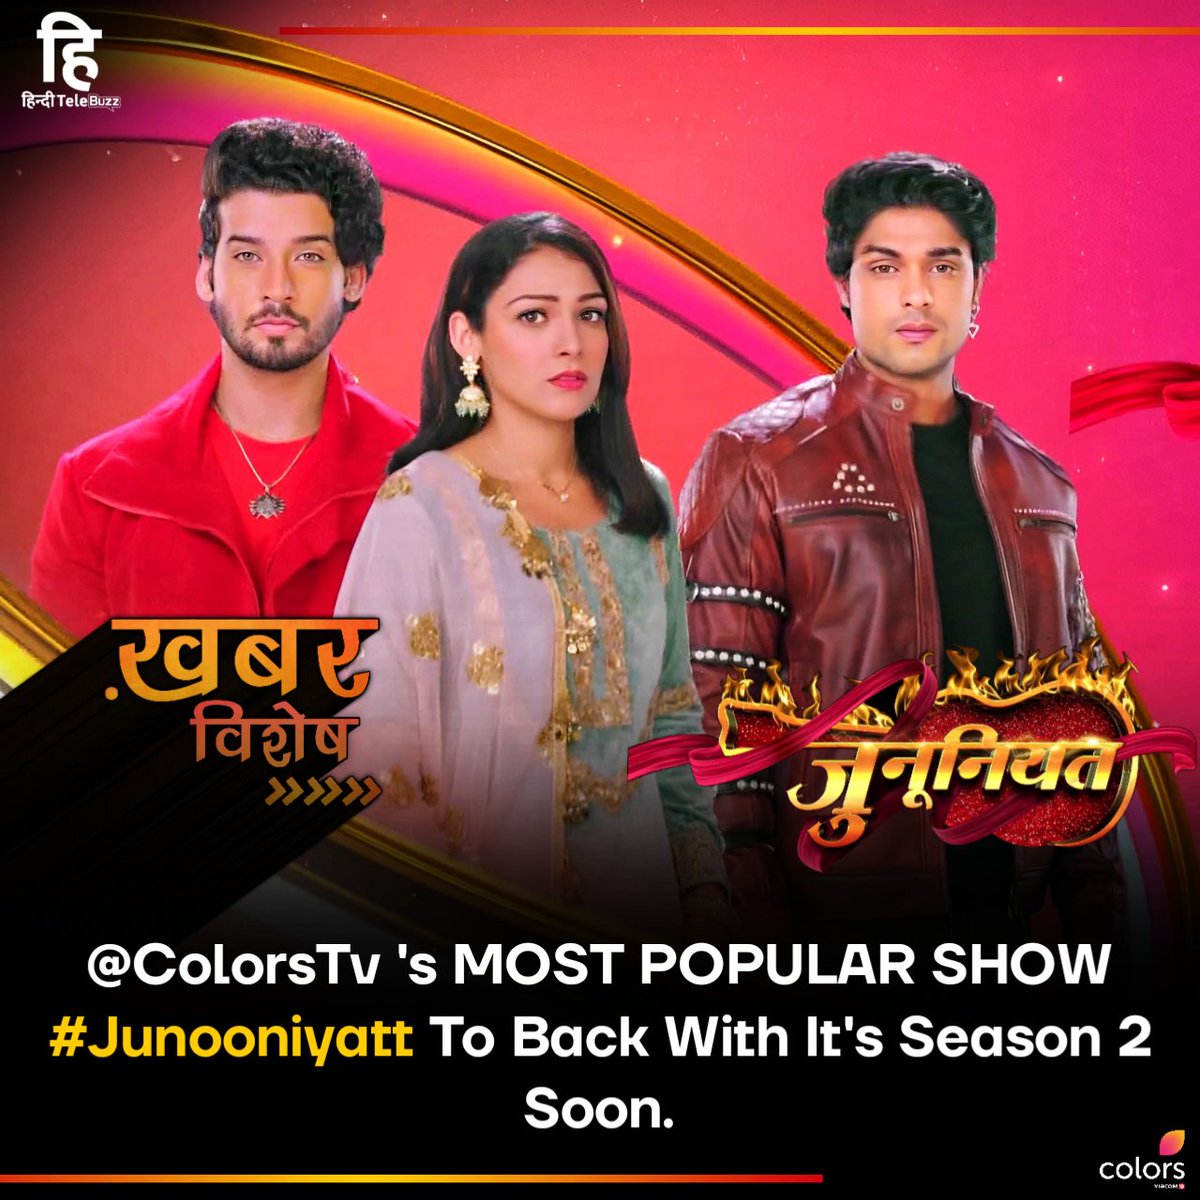 #SuperExclusive

#ColorsTv 's MOST POPULAR SHOW #Junooniyatt To Back With It's Season 2 Soon. 

@HindiTeleBuzzTv
#AnkitGupta #neharana #gautamvig